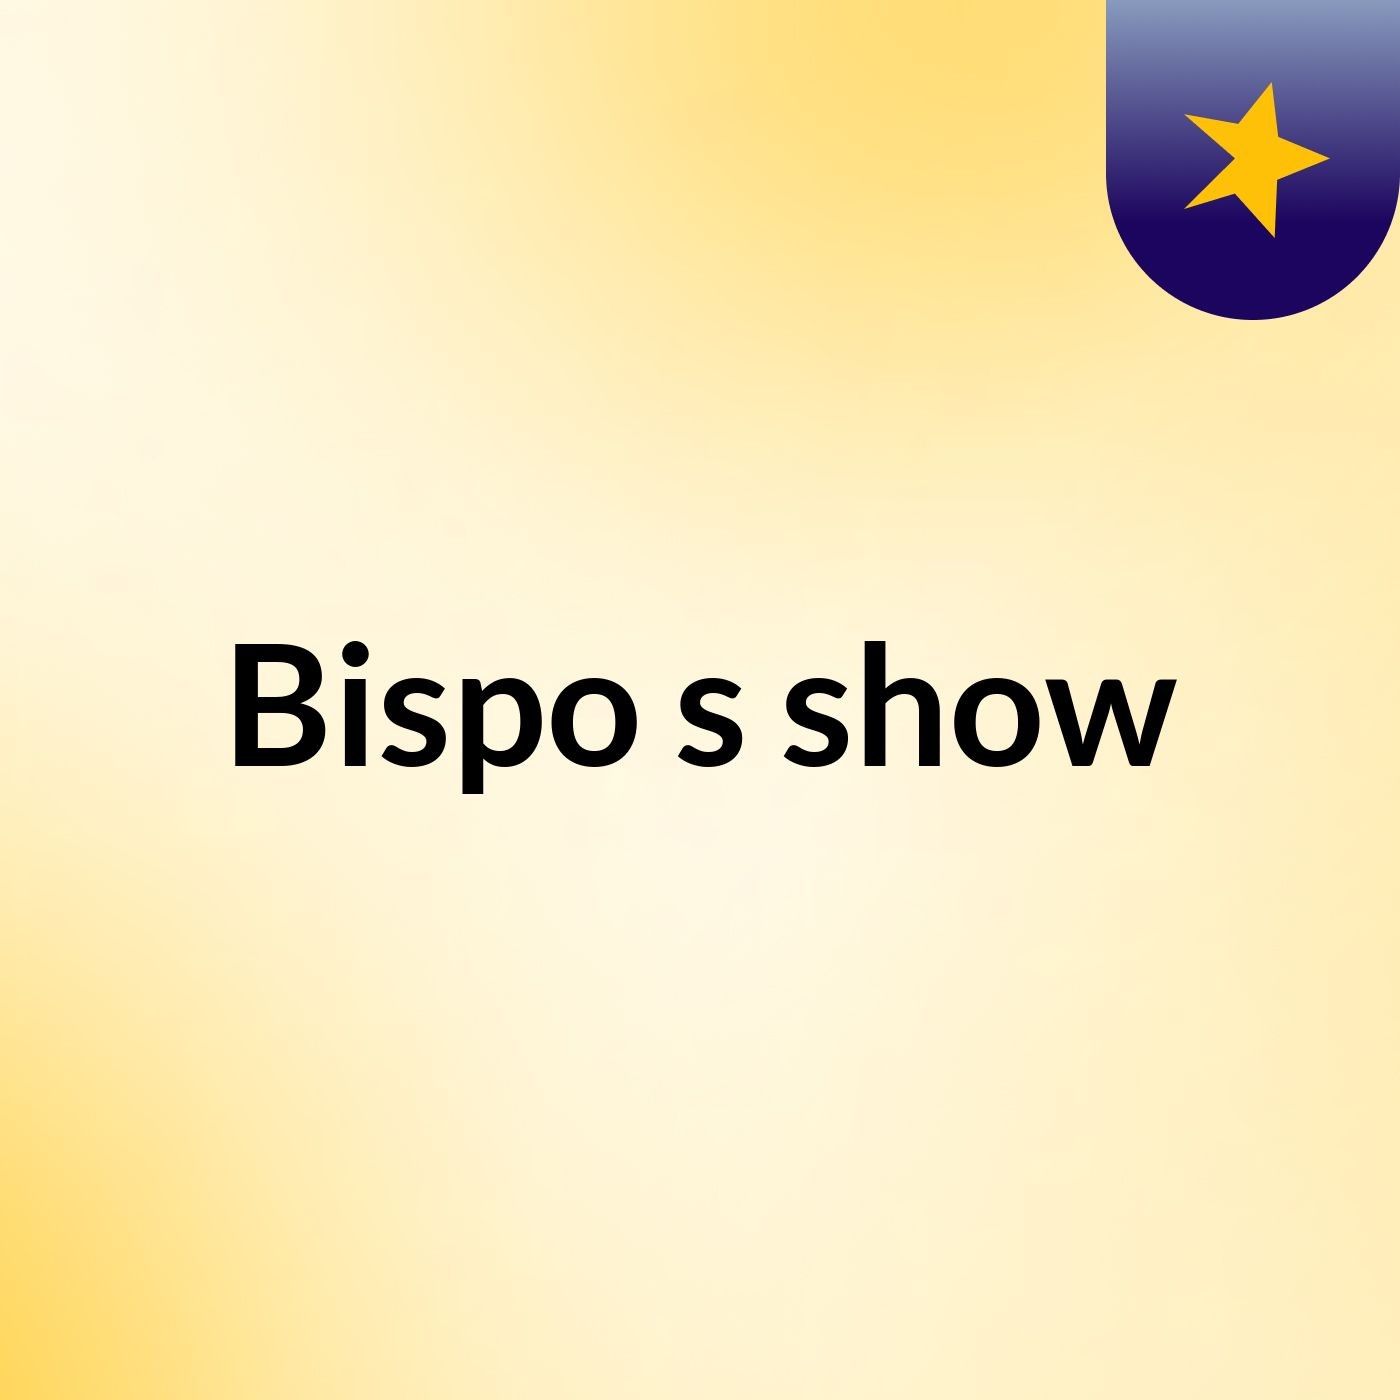 Bispo's show